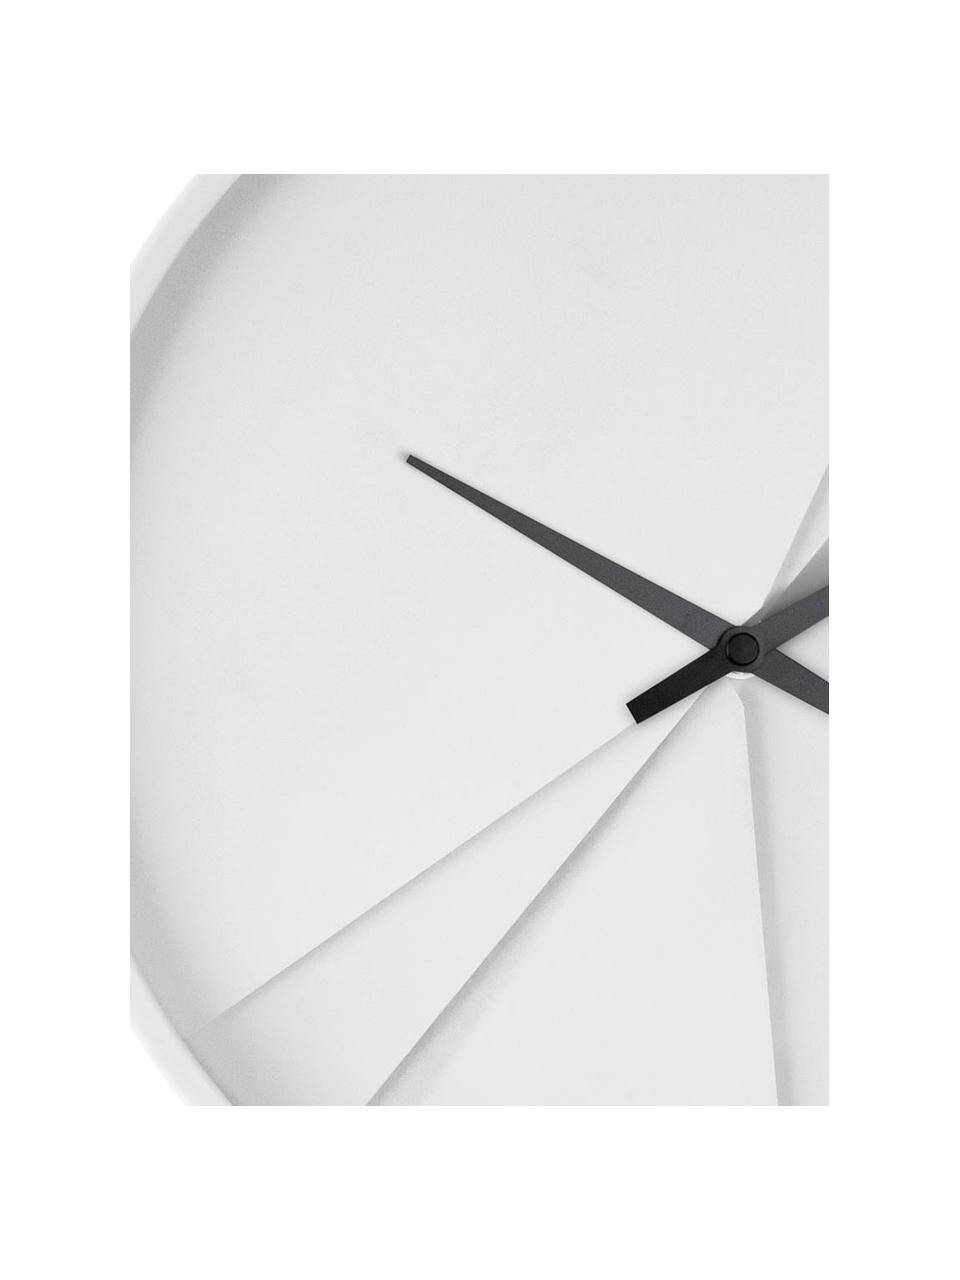 Reloj de pared Layerd Lines, Blanco, negro, Ø 30 cm